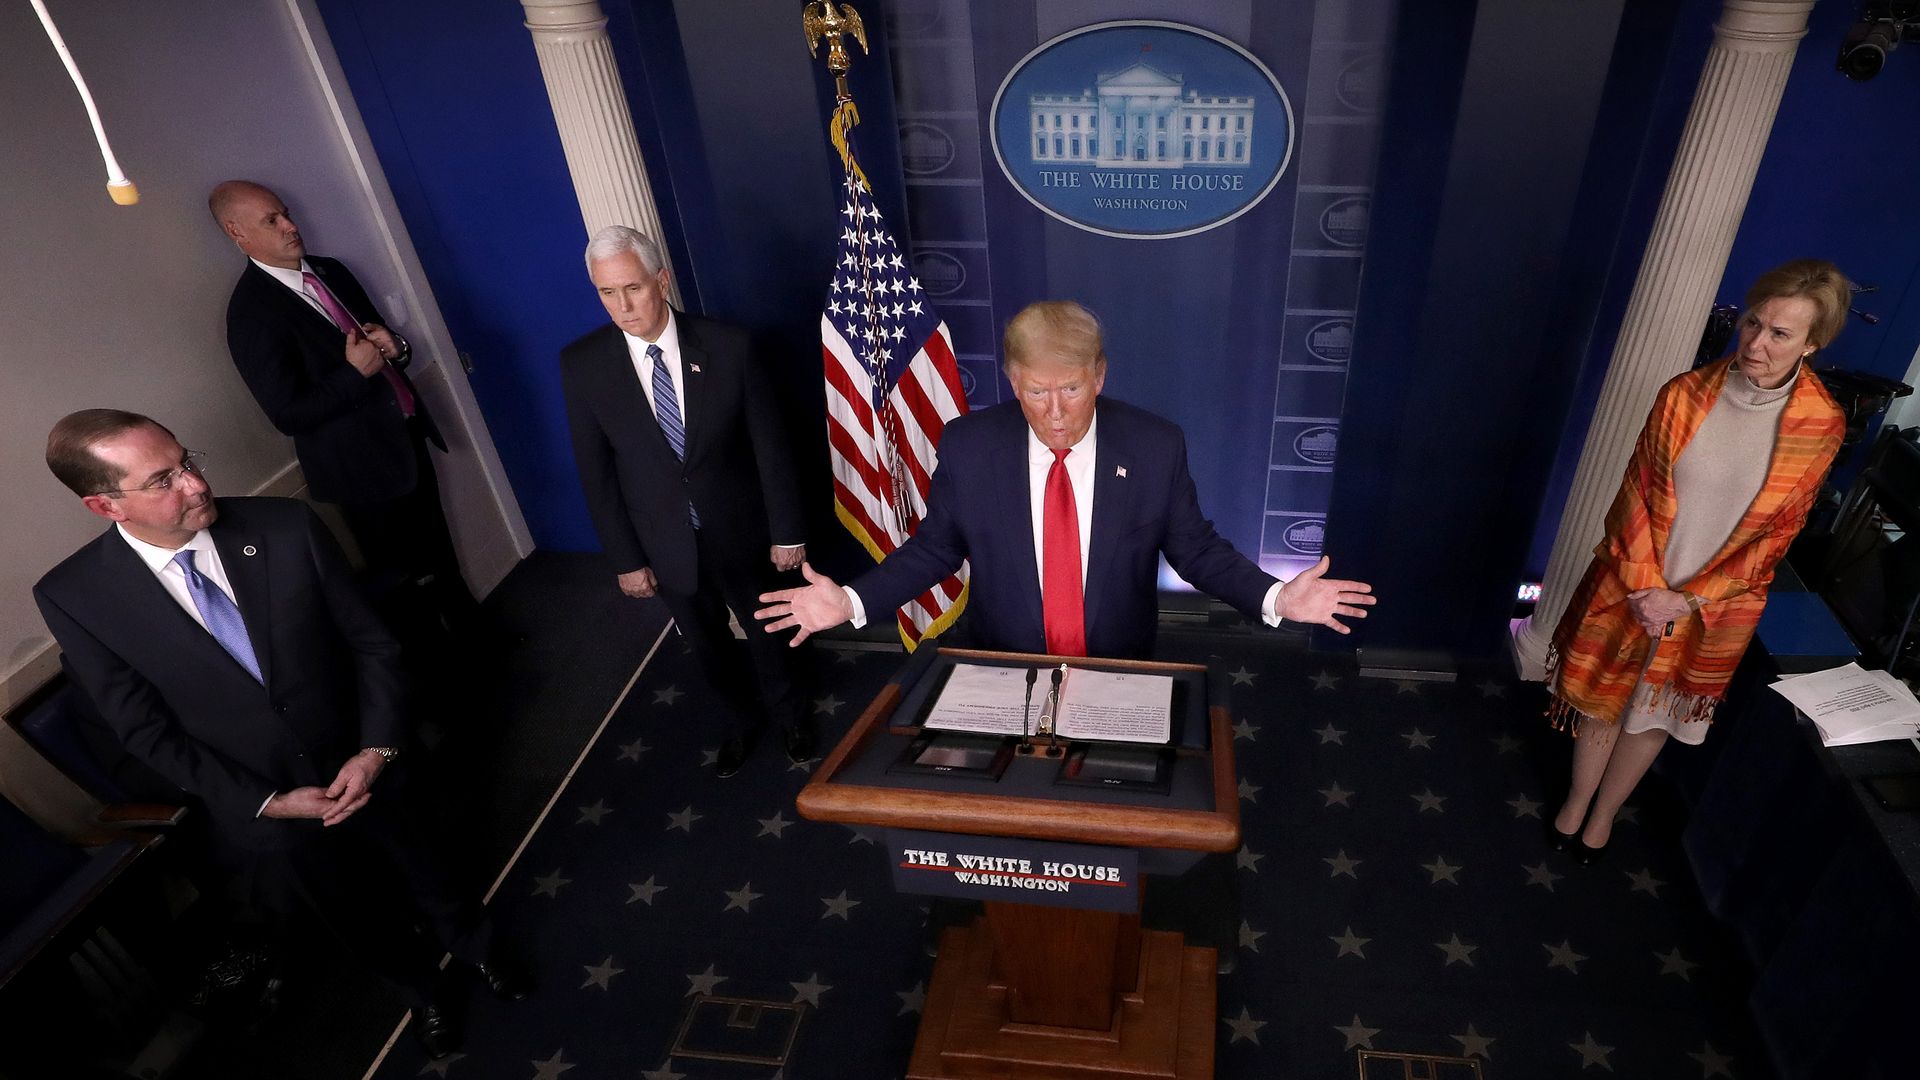 Trump at the White House podium